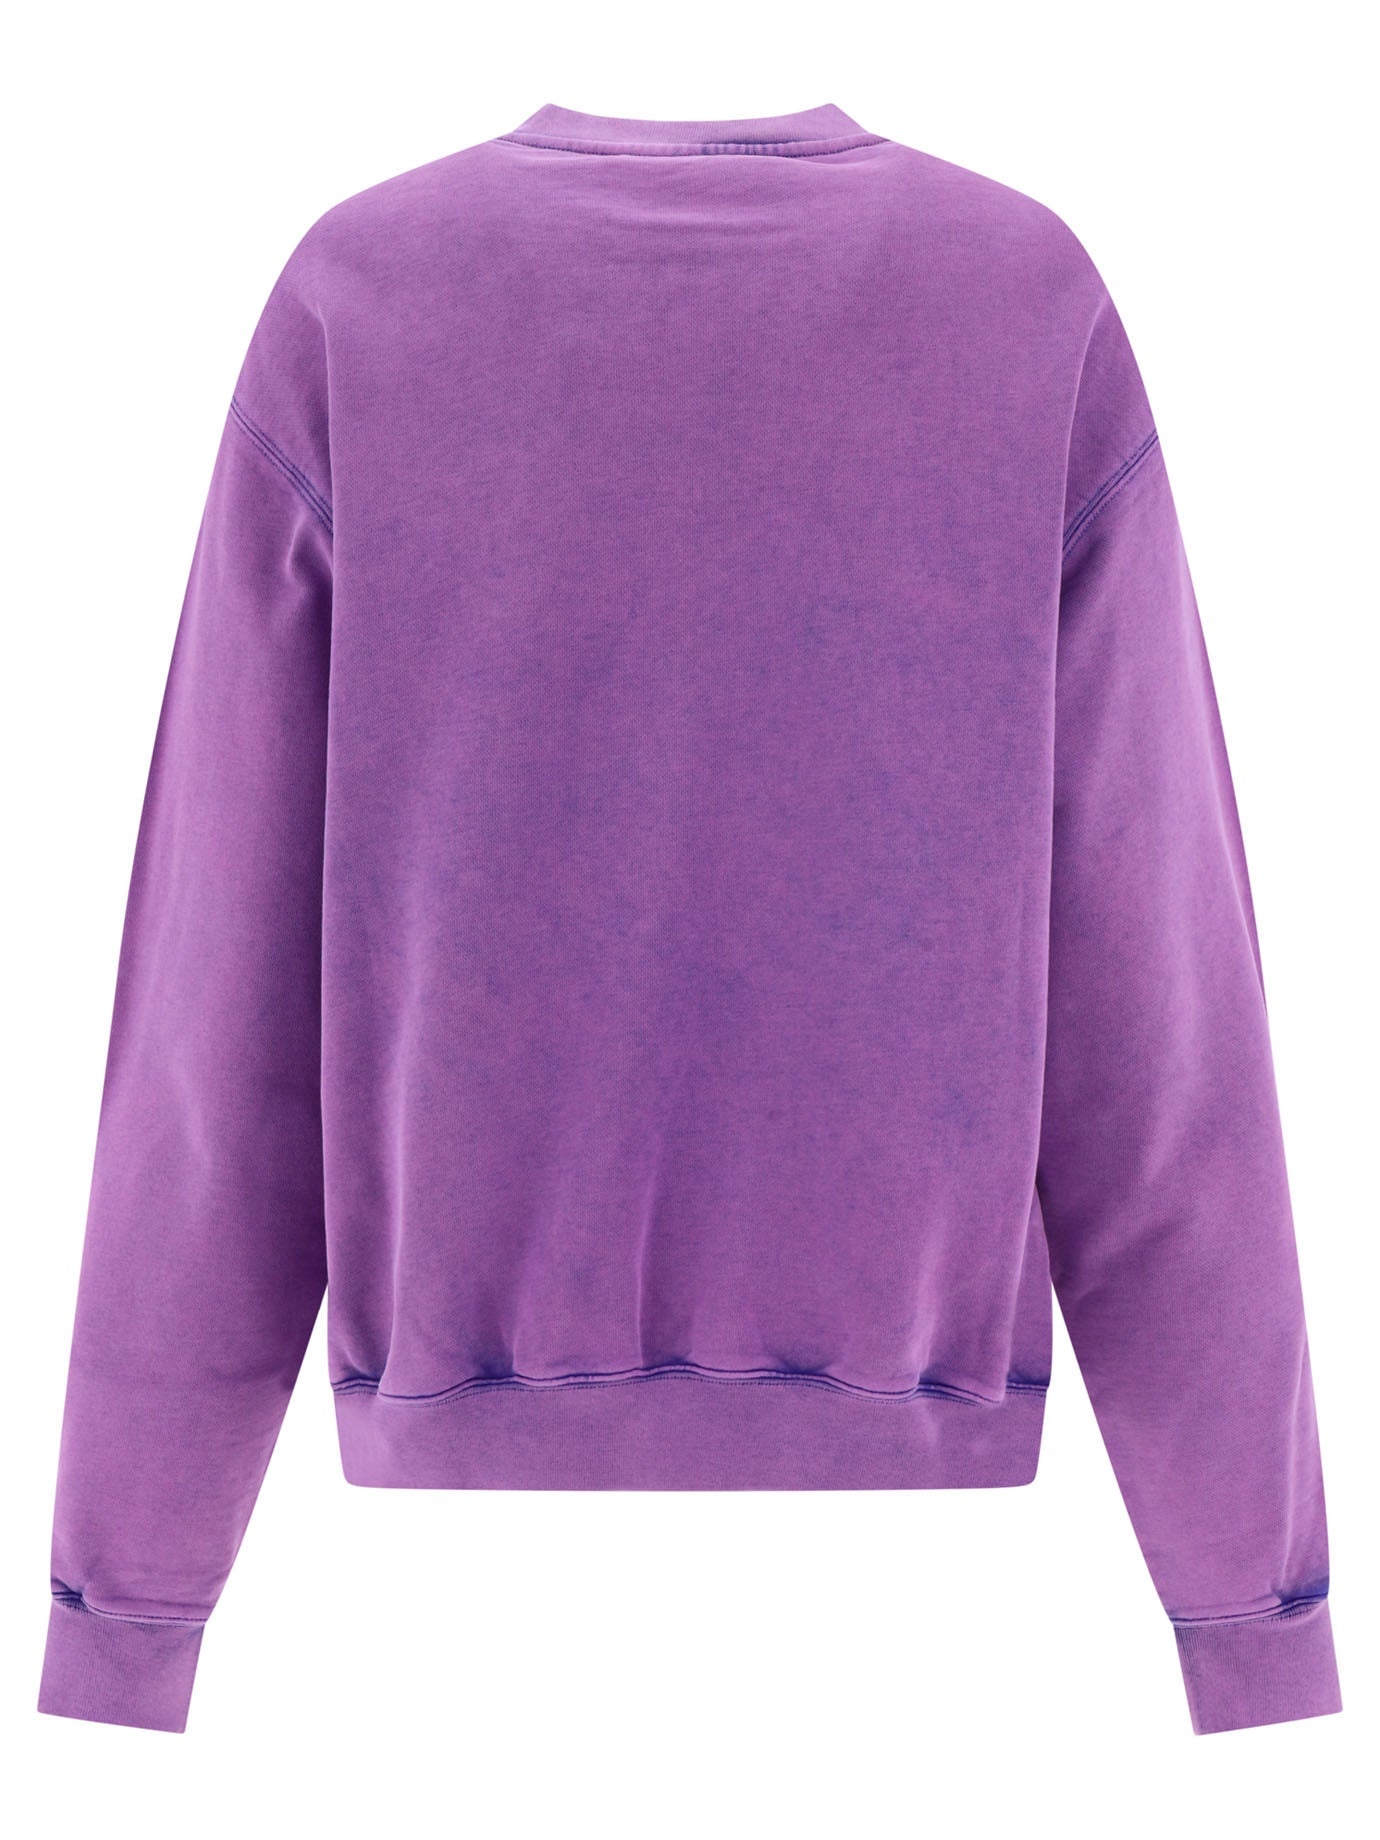 Acne Studios Sweatshirt With Blurred Logo - 2